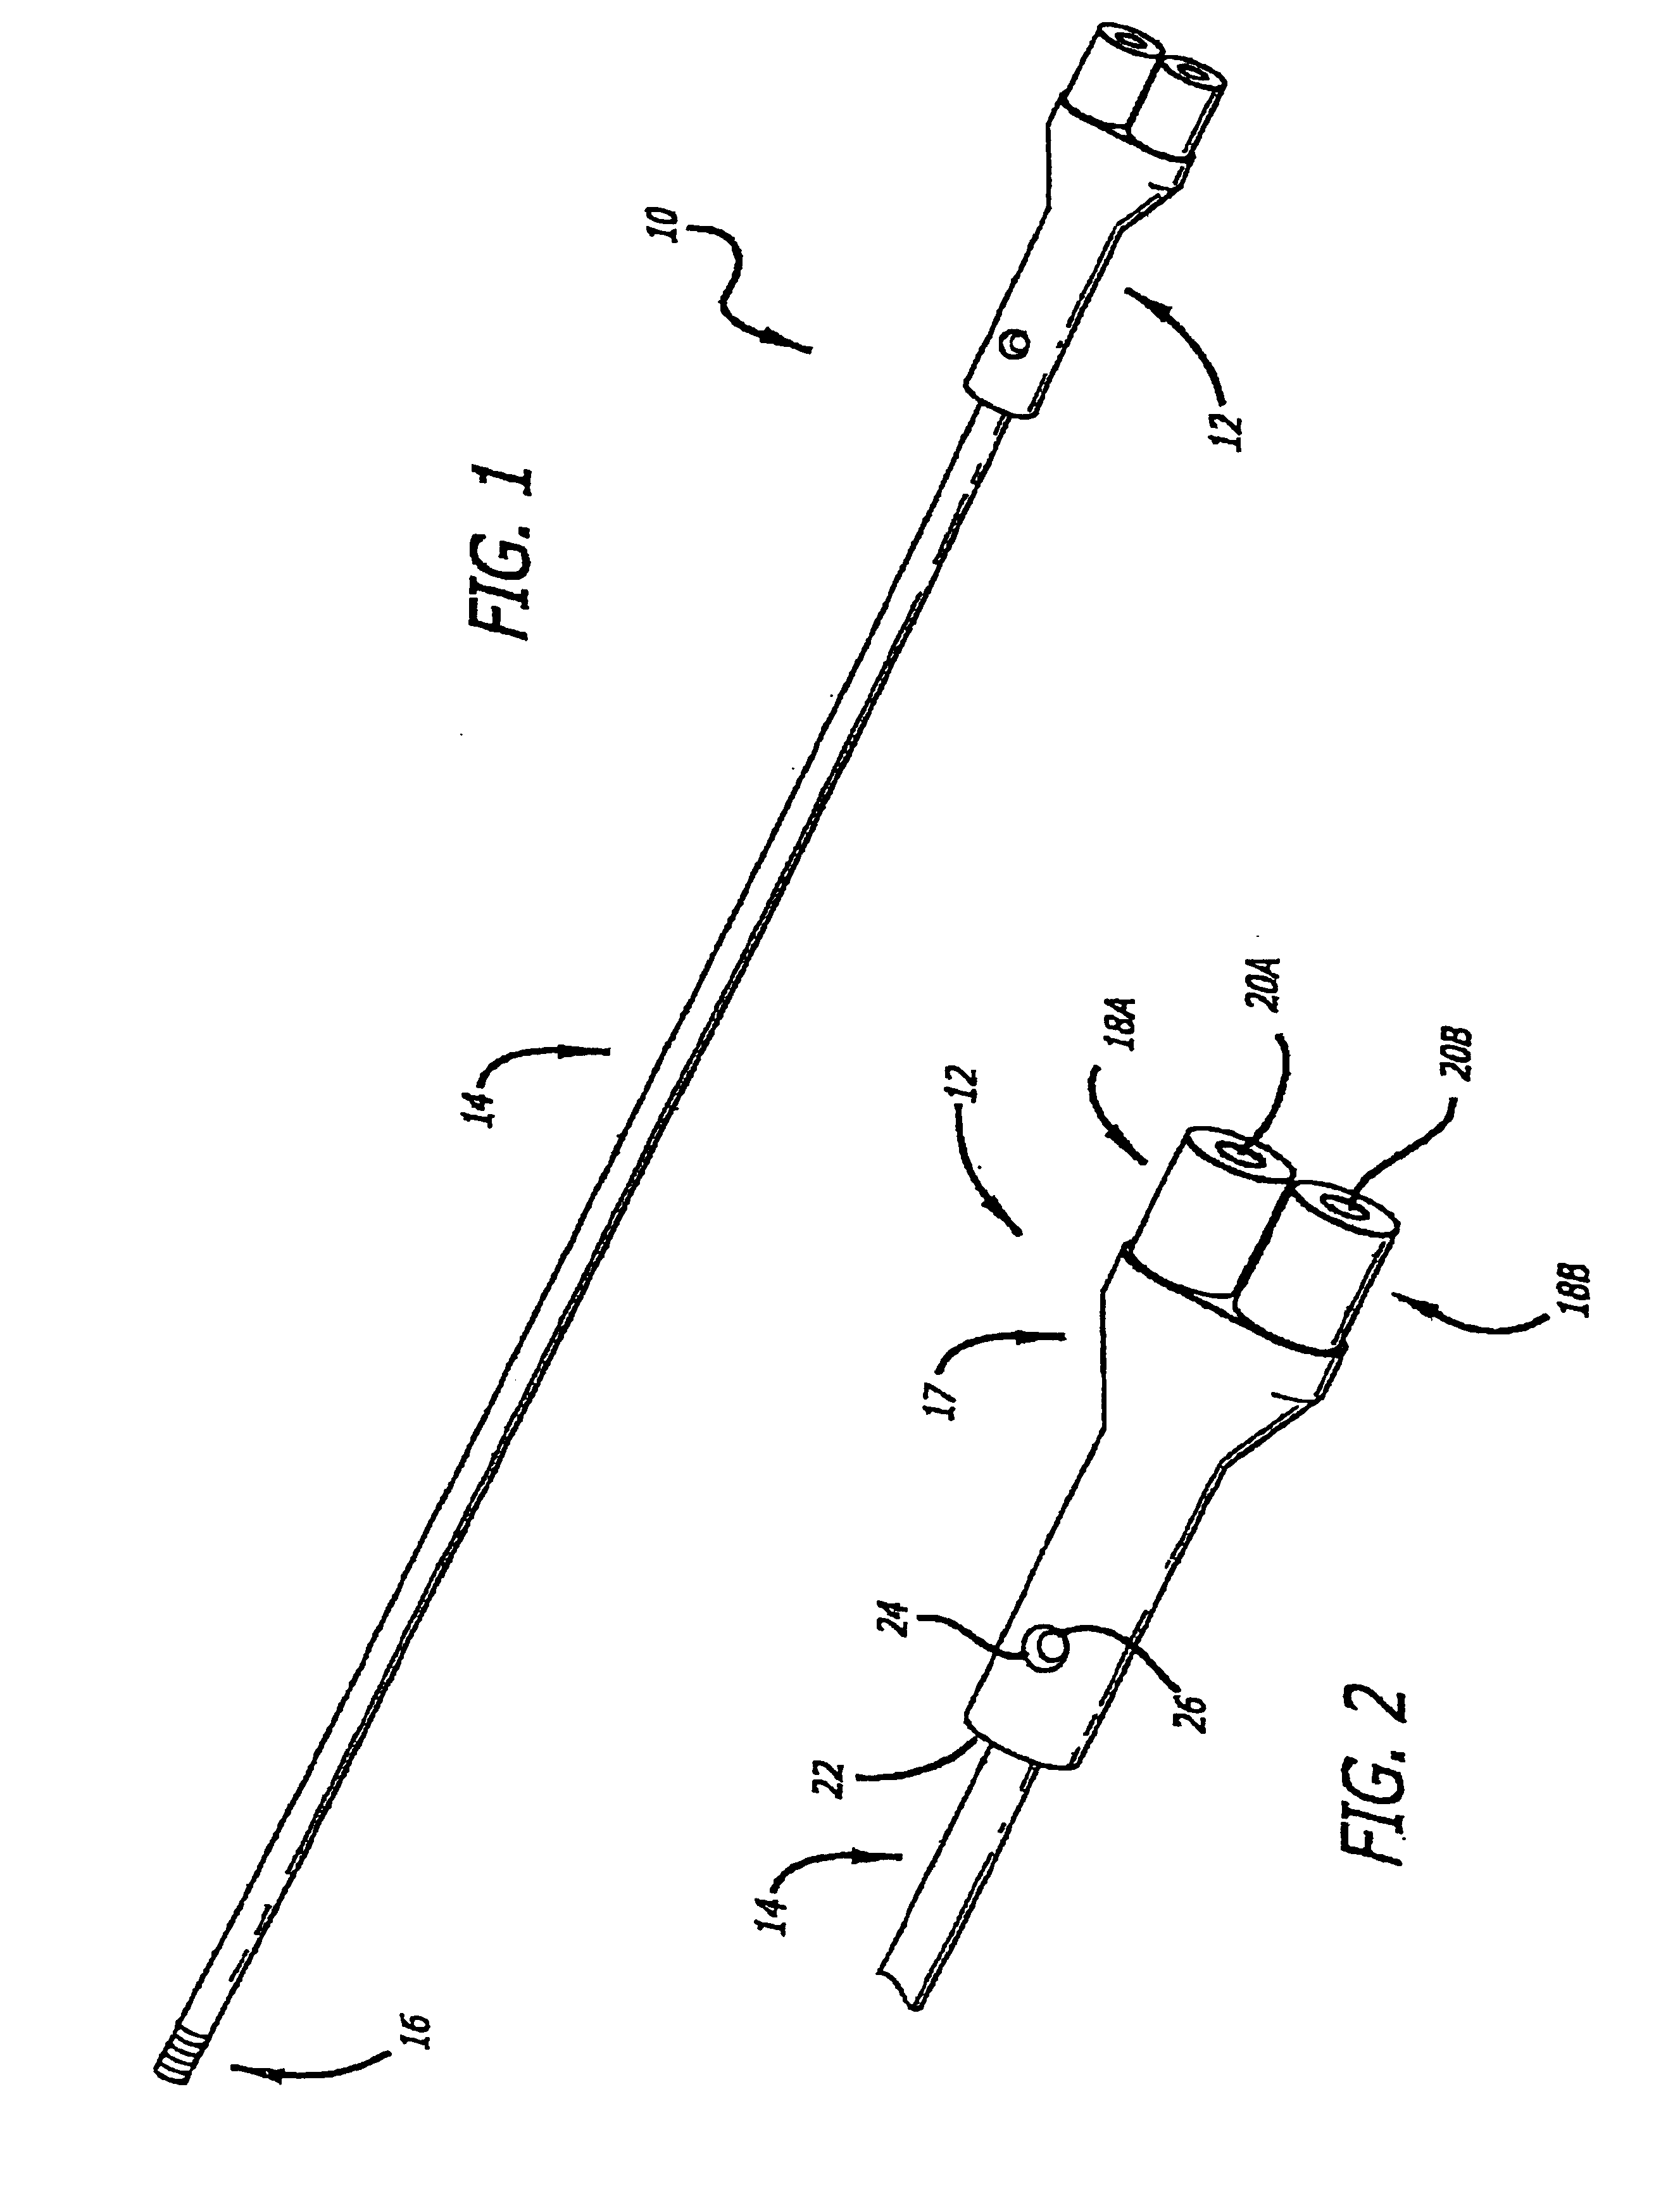 Laparoscopic spray device and method of use